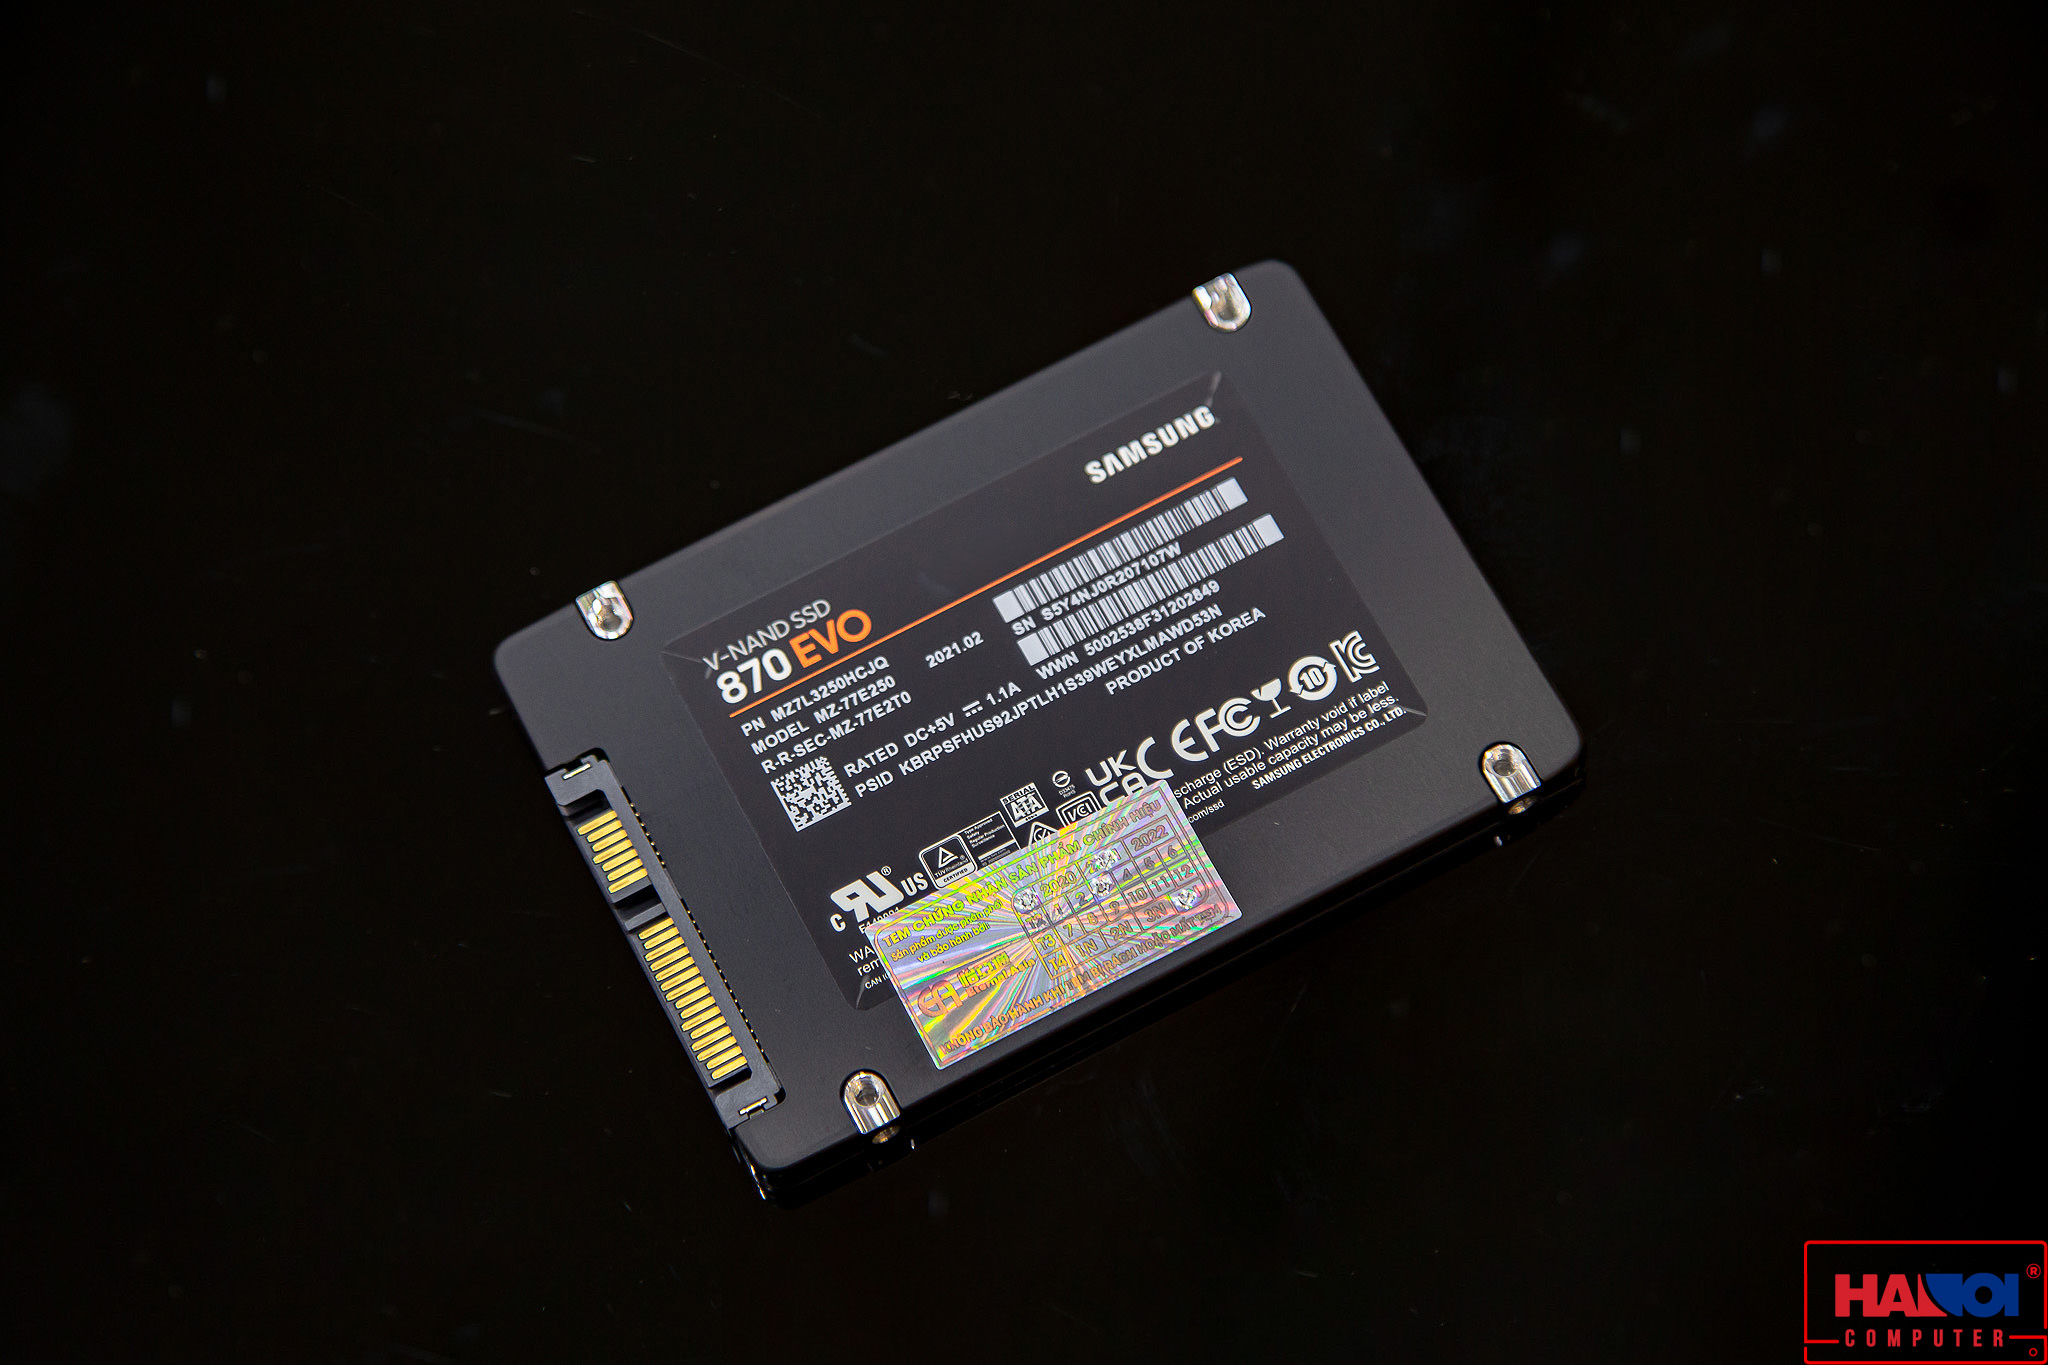 Ổ cứng SSD Samsung 870 EVO 500GB SATA III 6Gb/s 2.5 inch ( Đọc 560MB/s - Ghi 530MB/s) - (MZ-77E500BW)